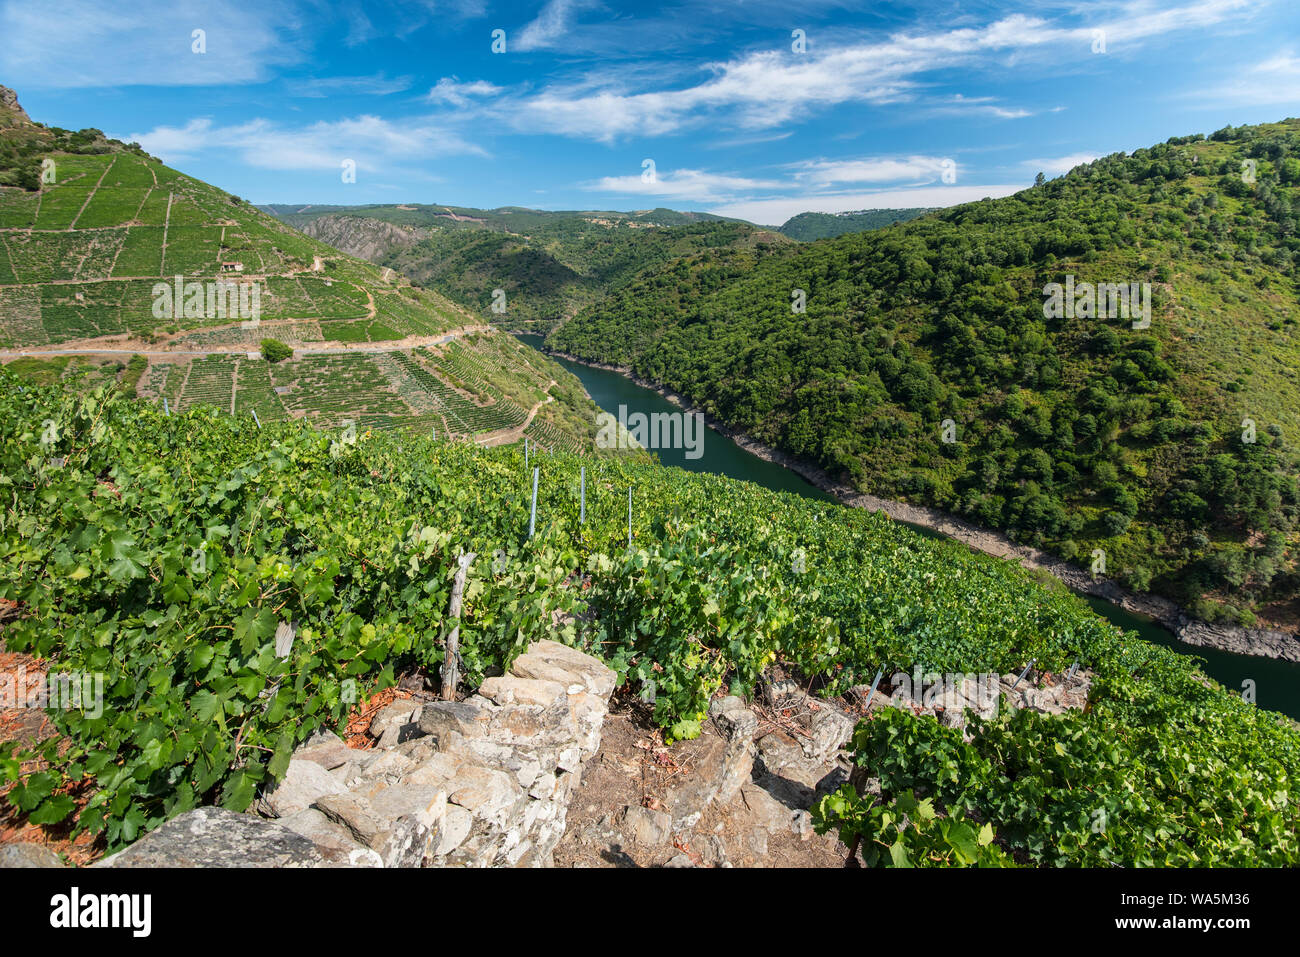 vineyards on mountains at river Sil in region Ribeira Sacra, Galicia, Spain. Stock Photo